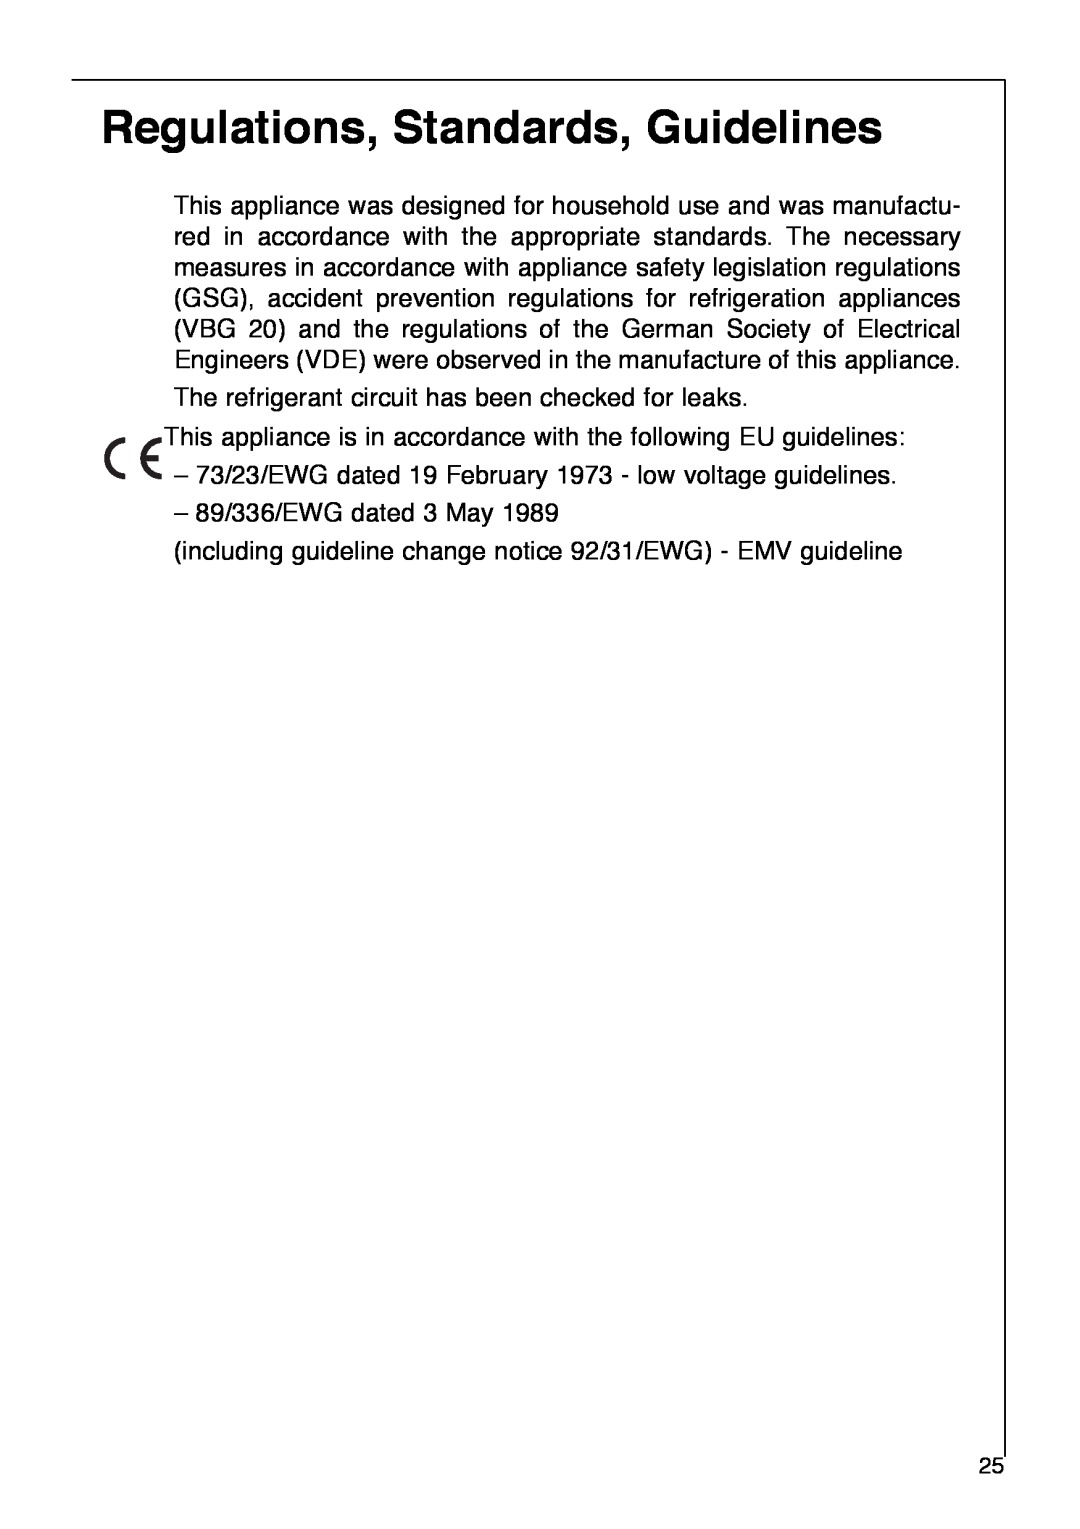 Electrolux SANTO 2842-4 i installation instructions Regulations, Standards, Guidelines 